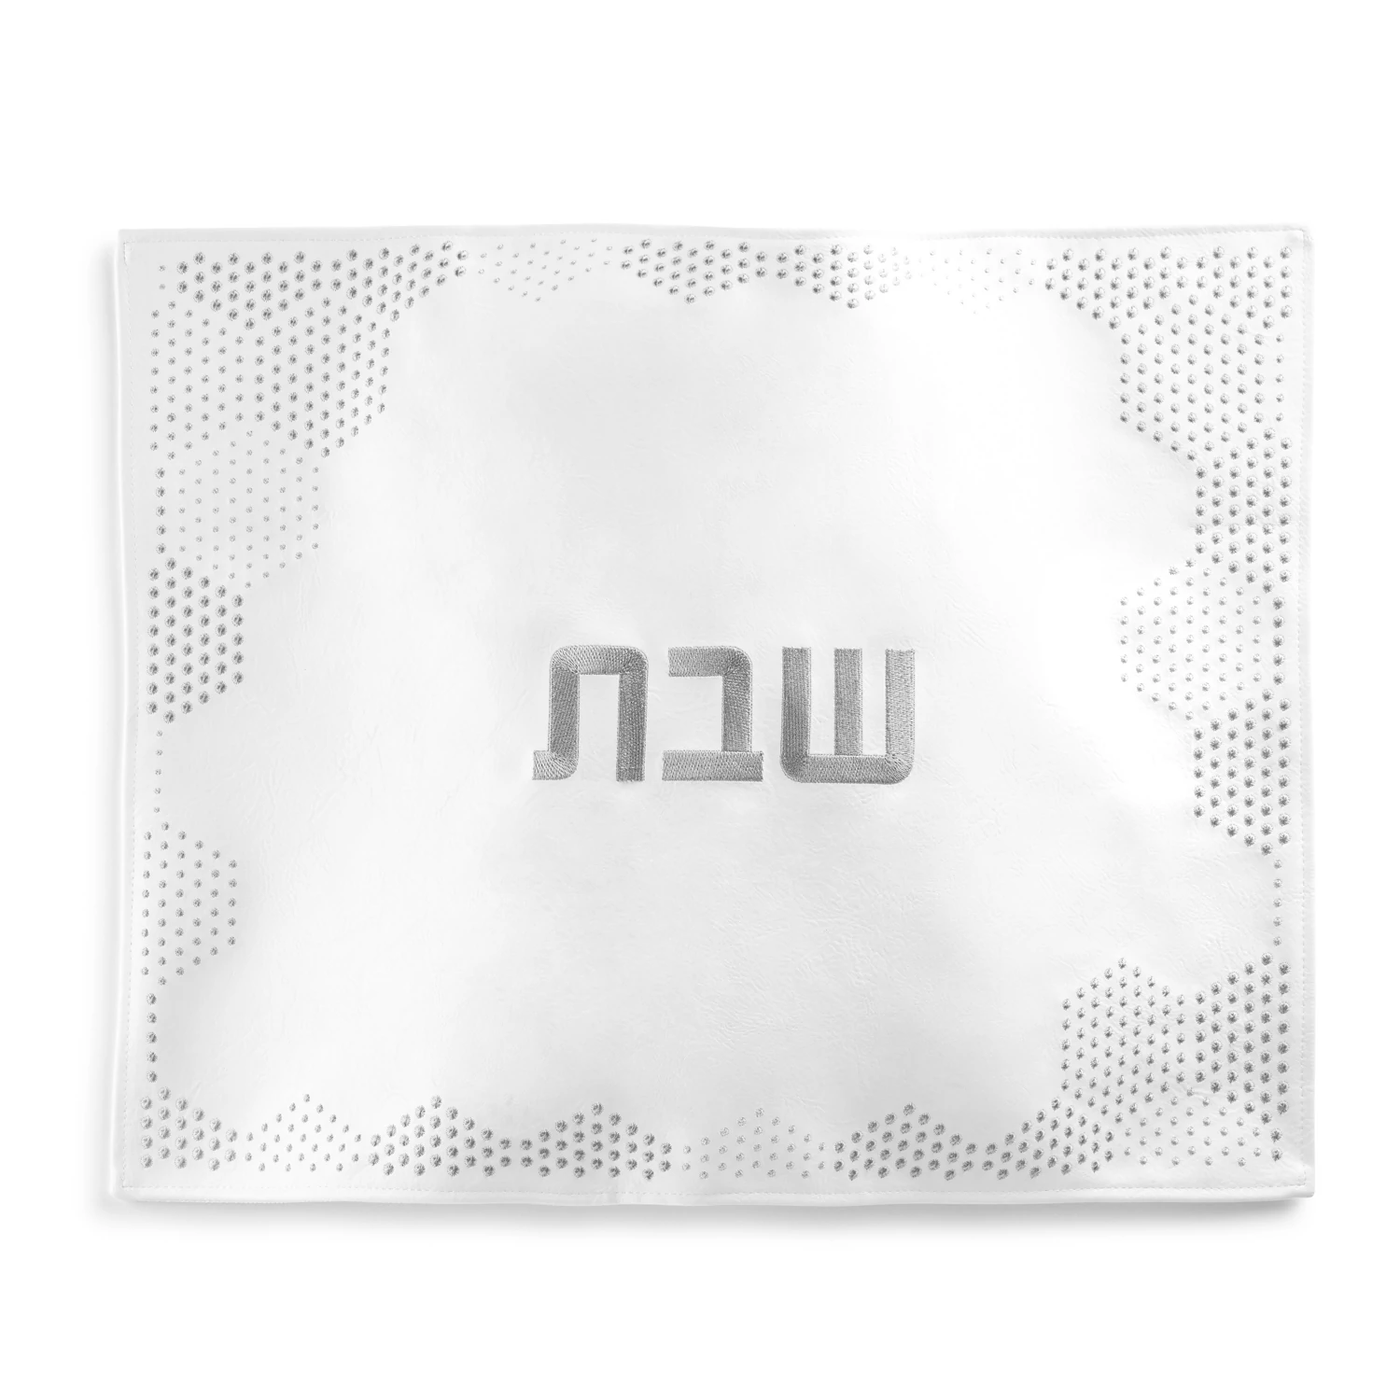 Hexagon Dot Border Challah Cover - Silver - Set With Style